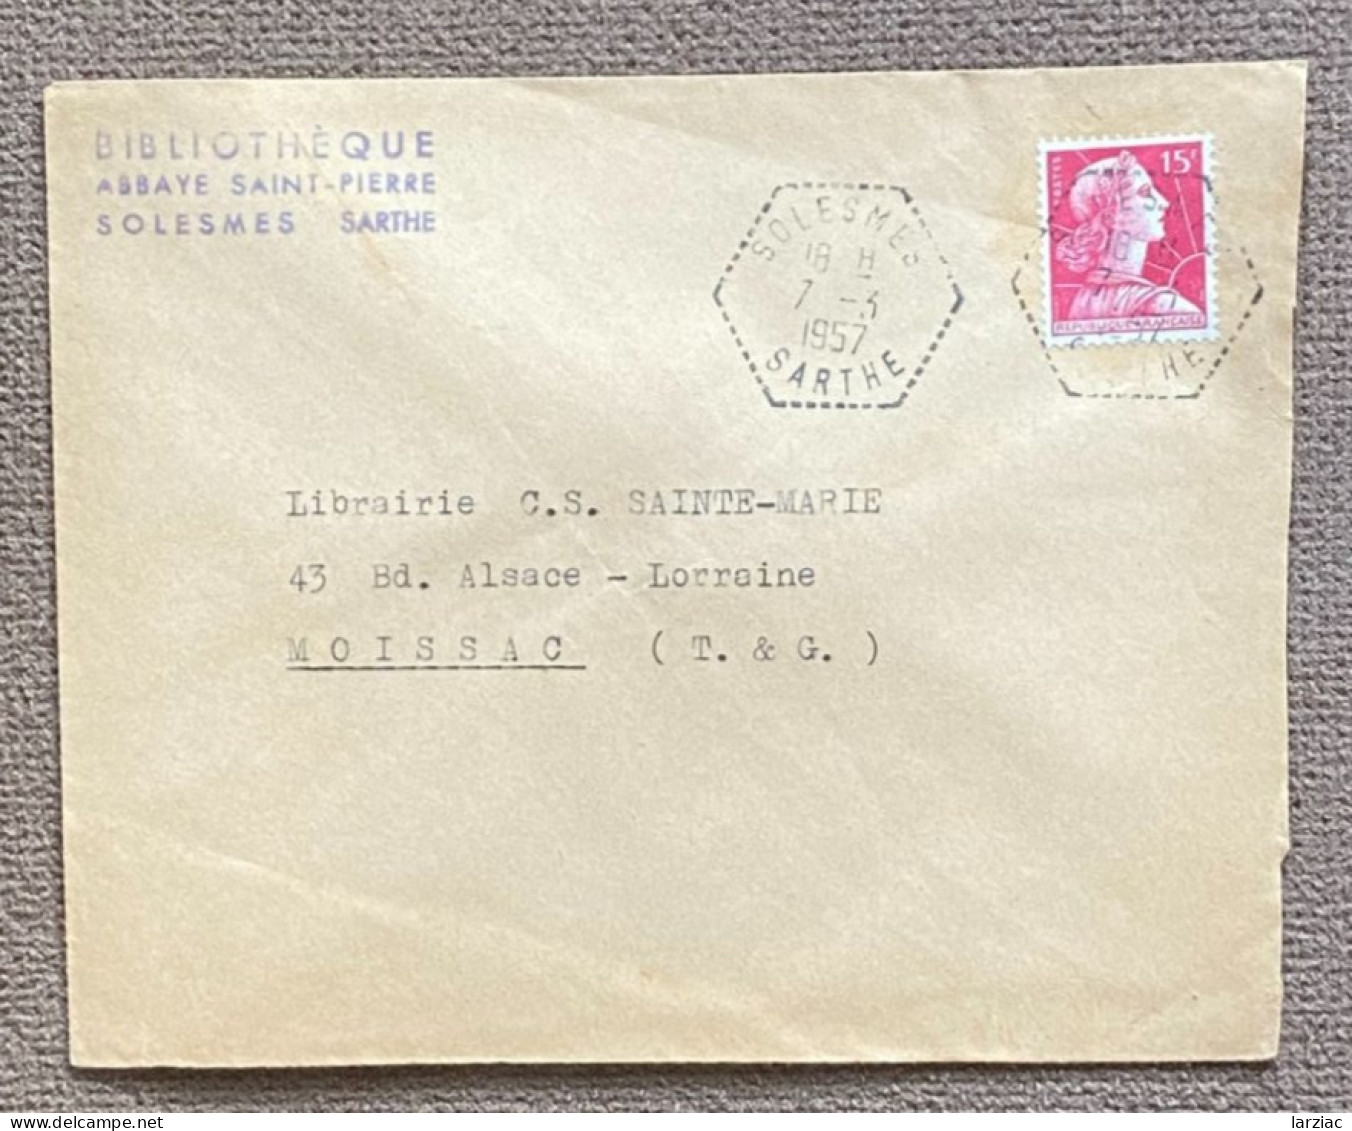 Enveloppe Affranchissement Type Muller Oblitération Recette Auxiliaire Solesmes Sarthe 1957 - 1921-1960: Modern Tijdperk